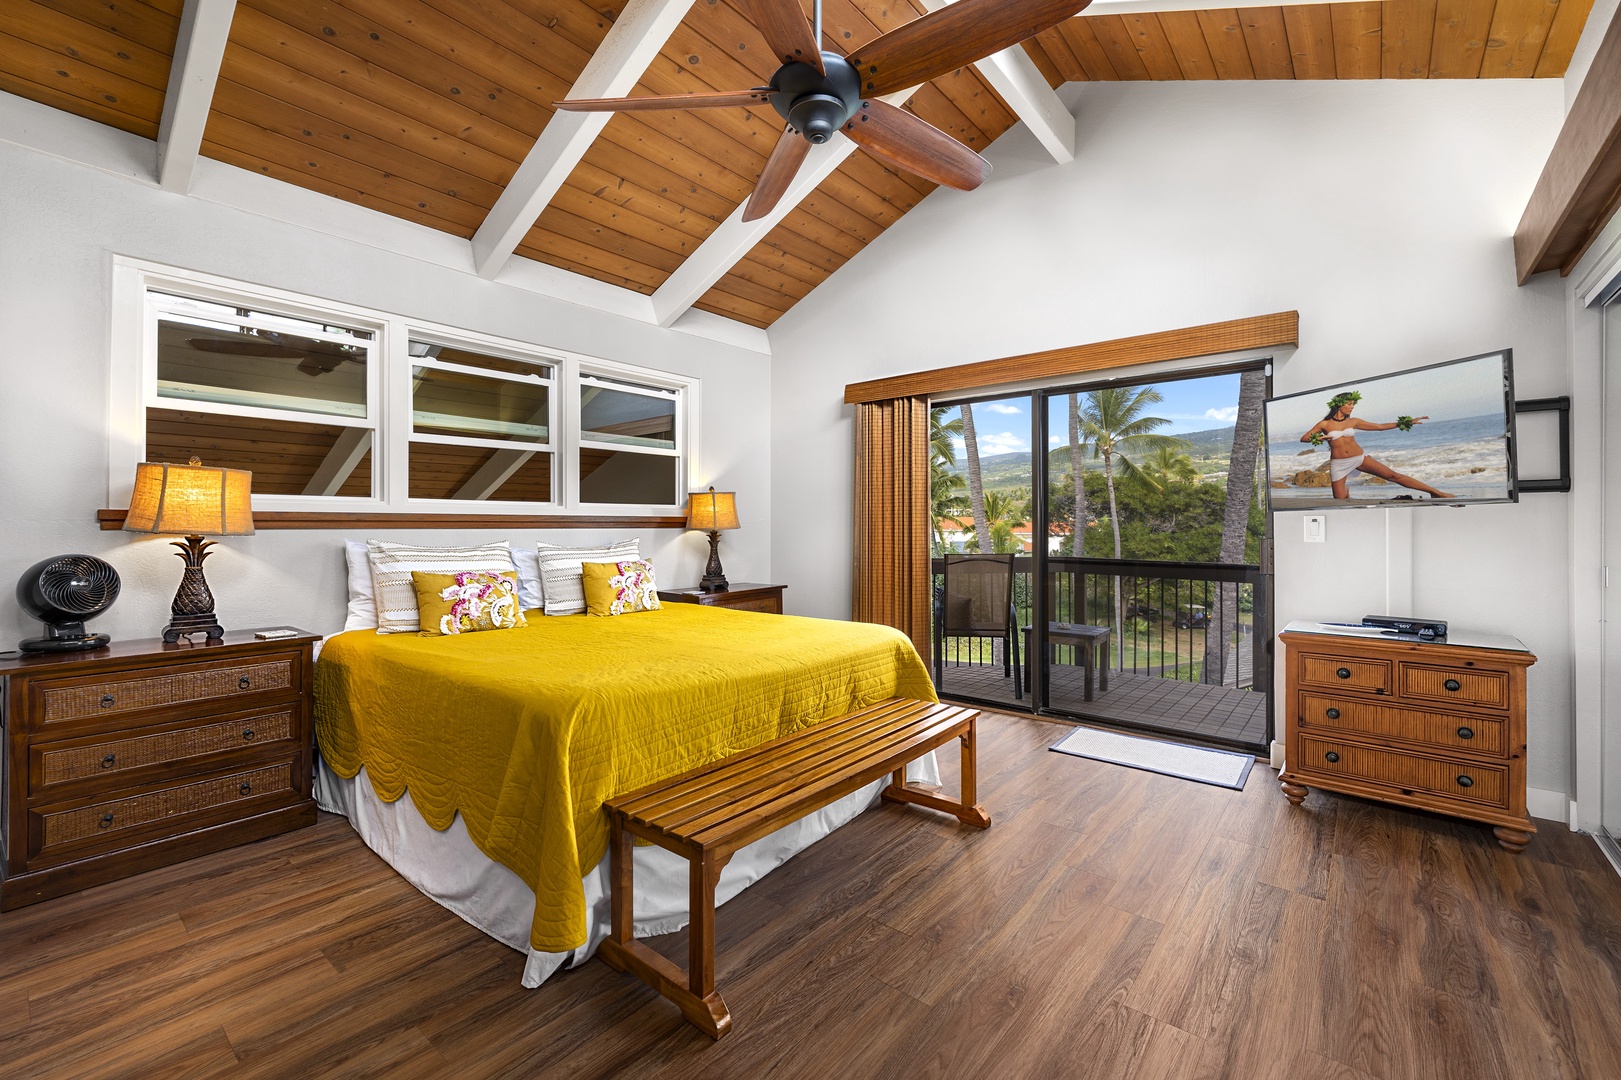 Kailua Kona Vacation Rentals, Kanaloa at Kona 1606 - Spacious open air Primary bedroom with central A/C